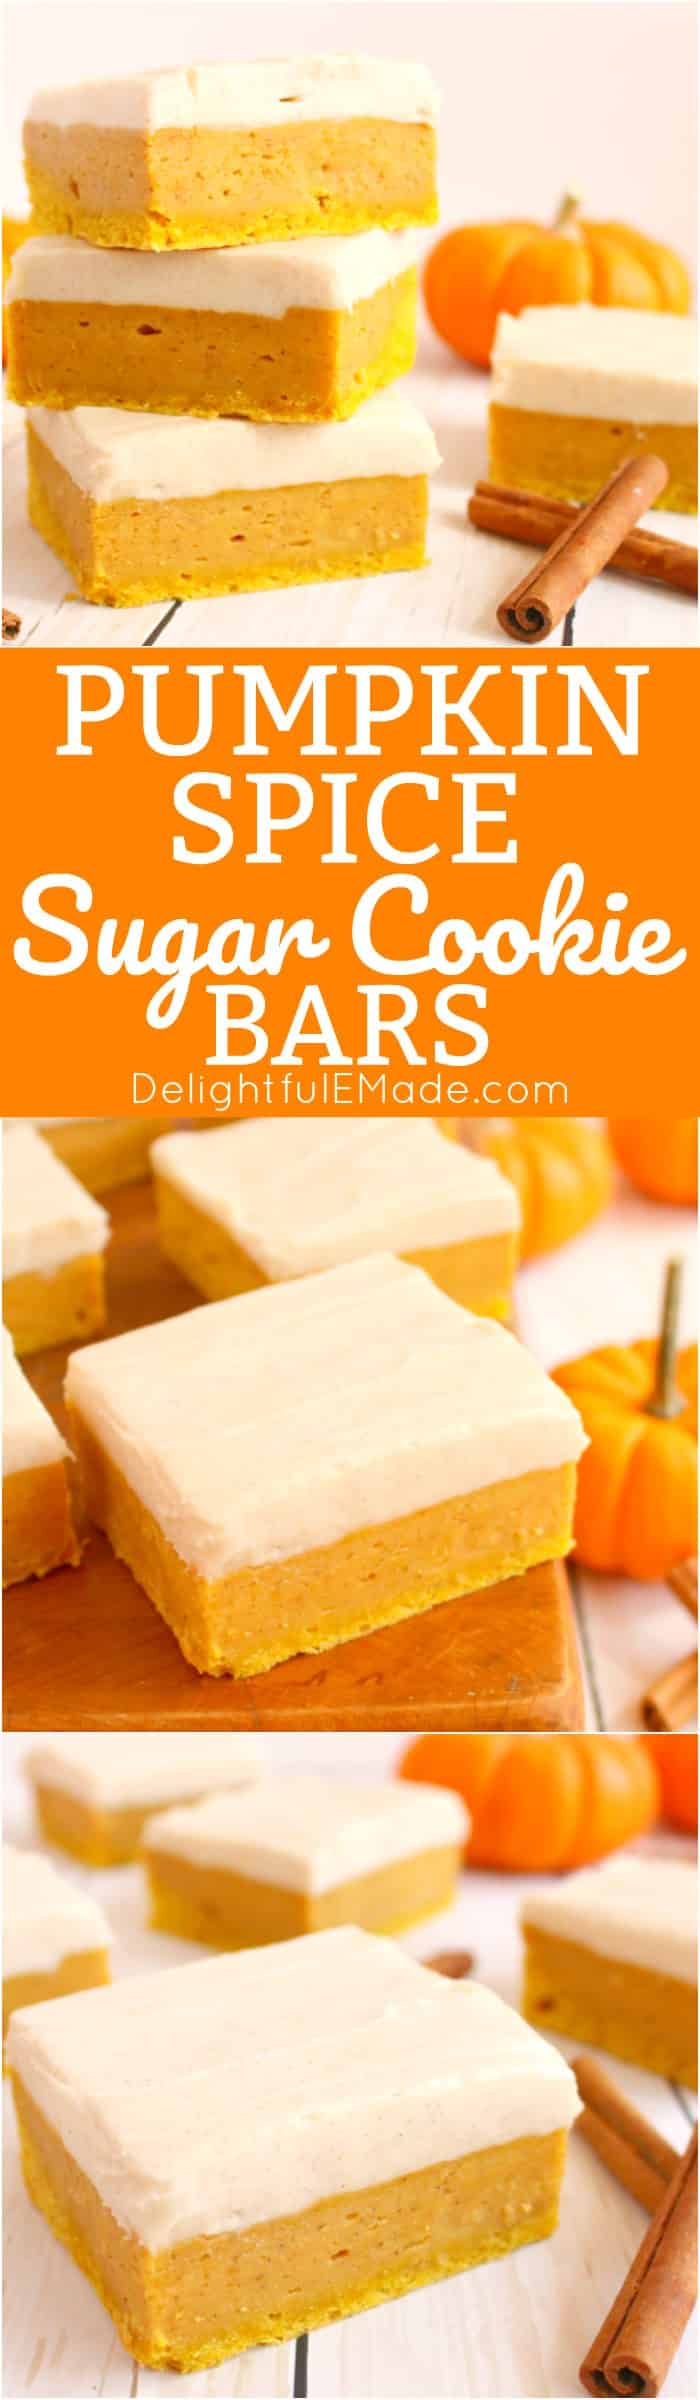 Pumpkin Spice Sugar Cookie Bars - An Amazing Pumpkin Bar Recipe!